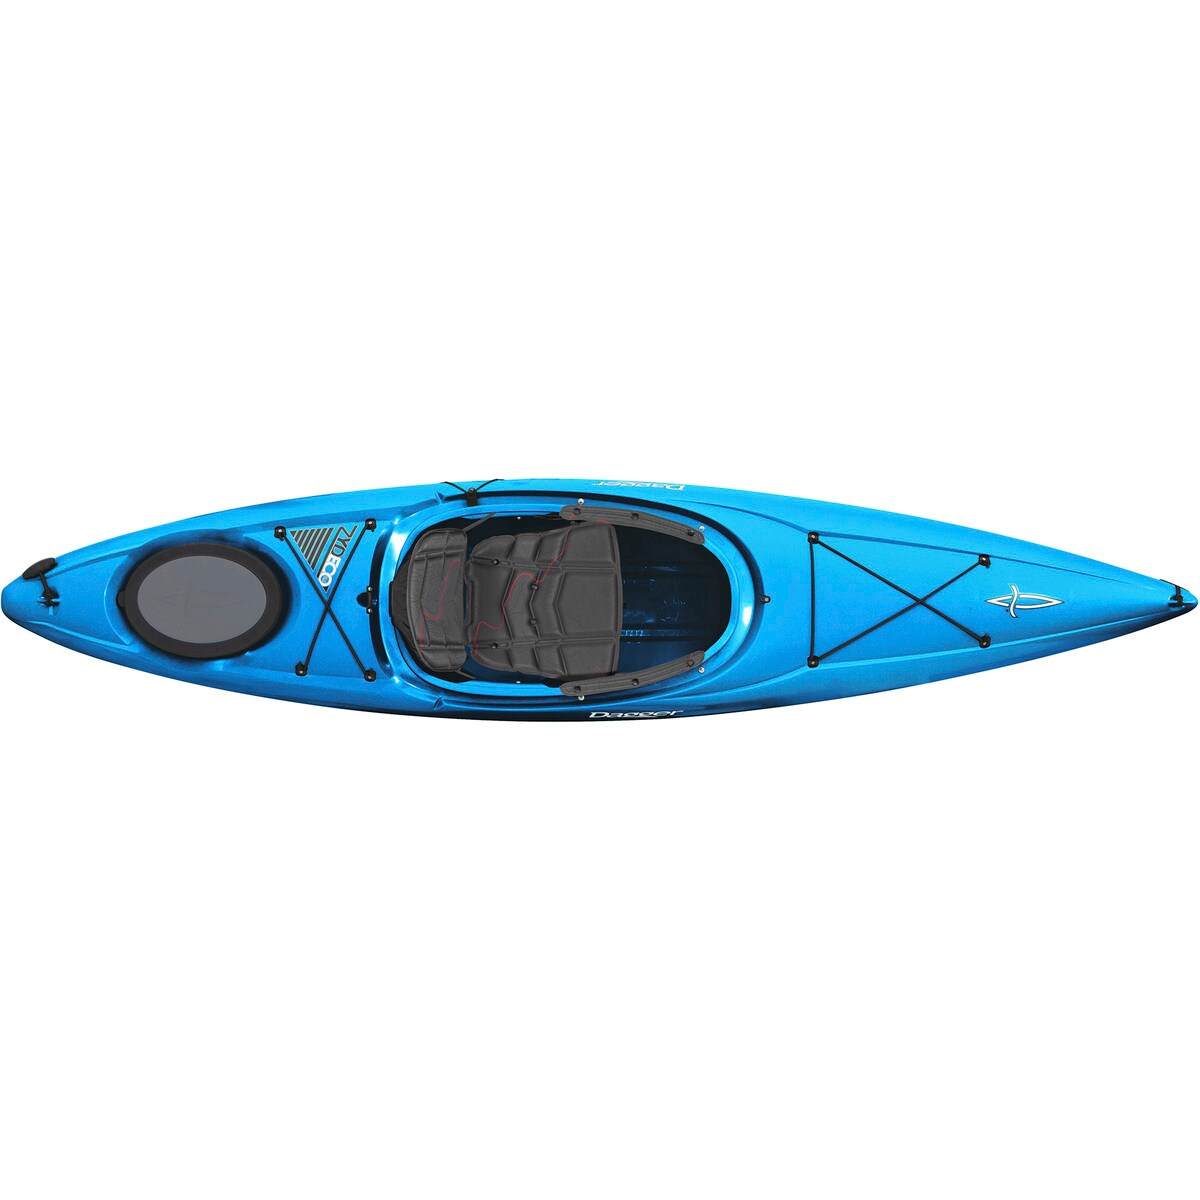 Color:Blue:Dagger Zydeco 11.0 Kayak